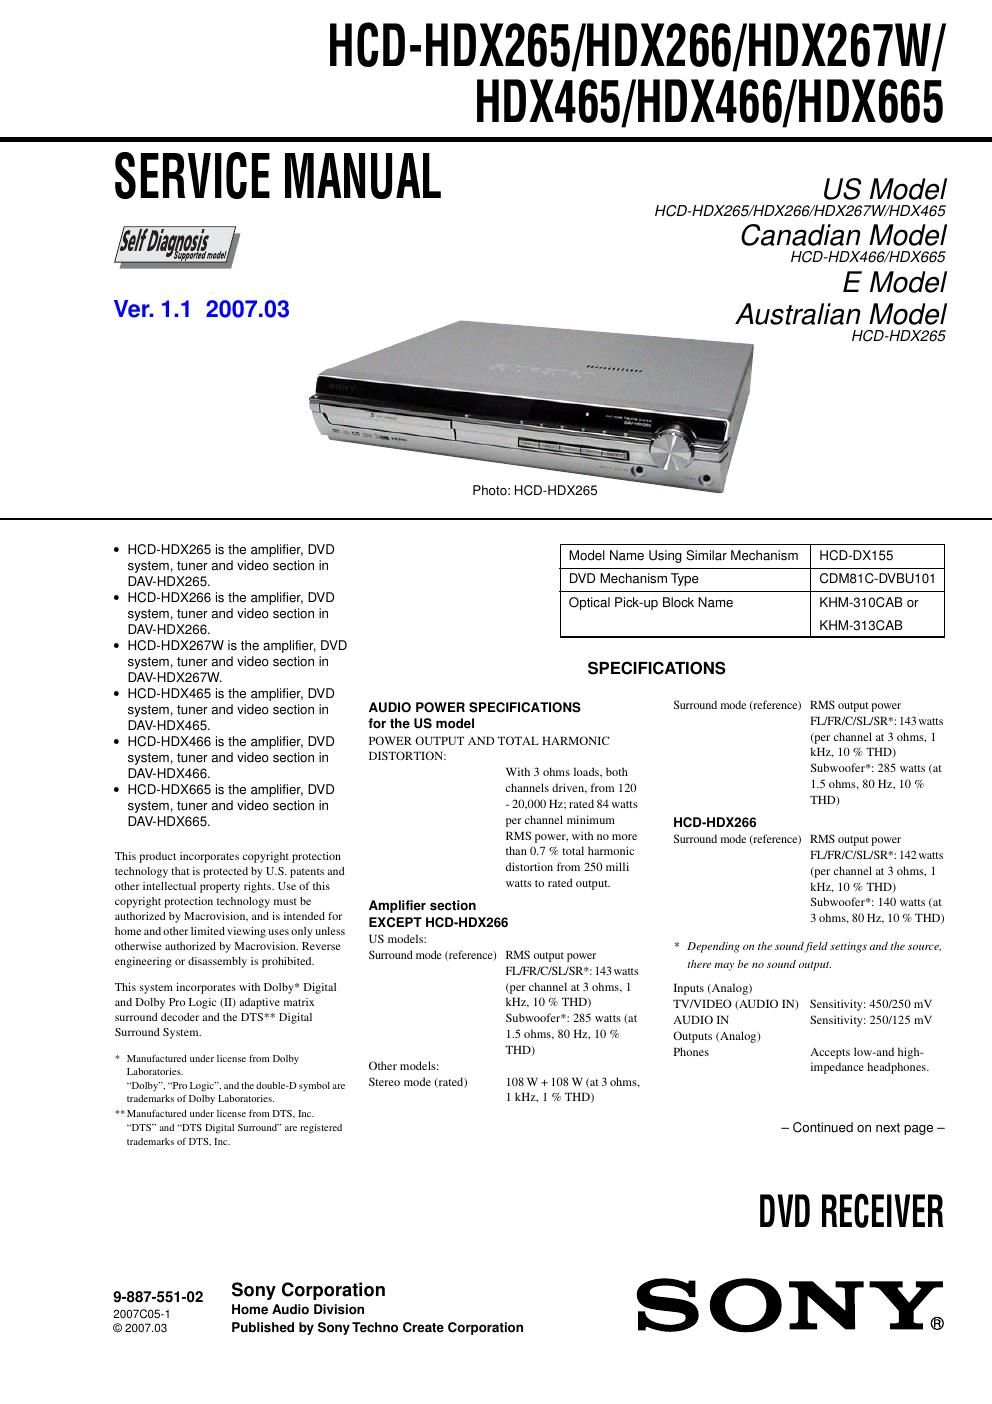 sony hcd hdx 265 service manual